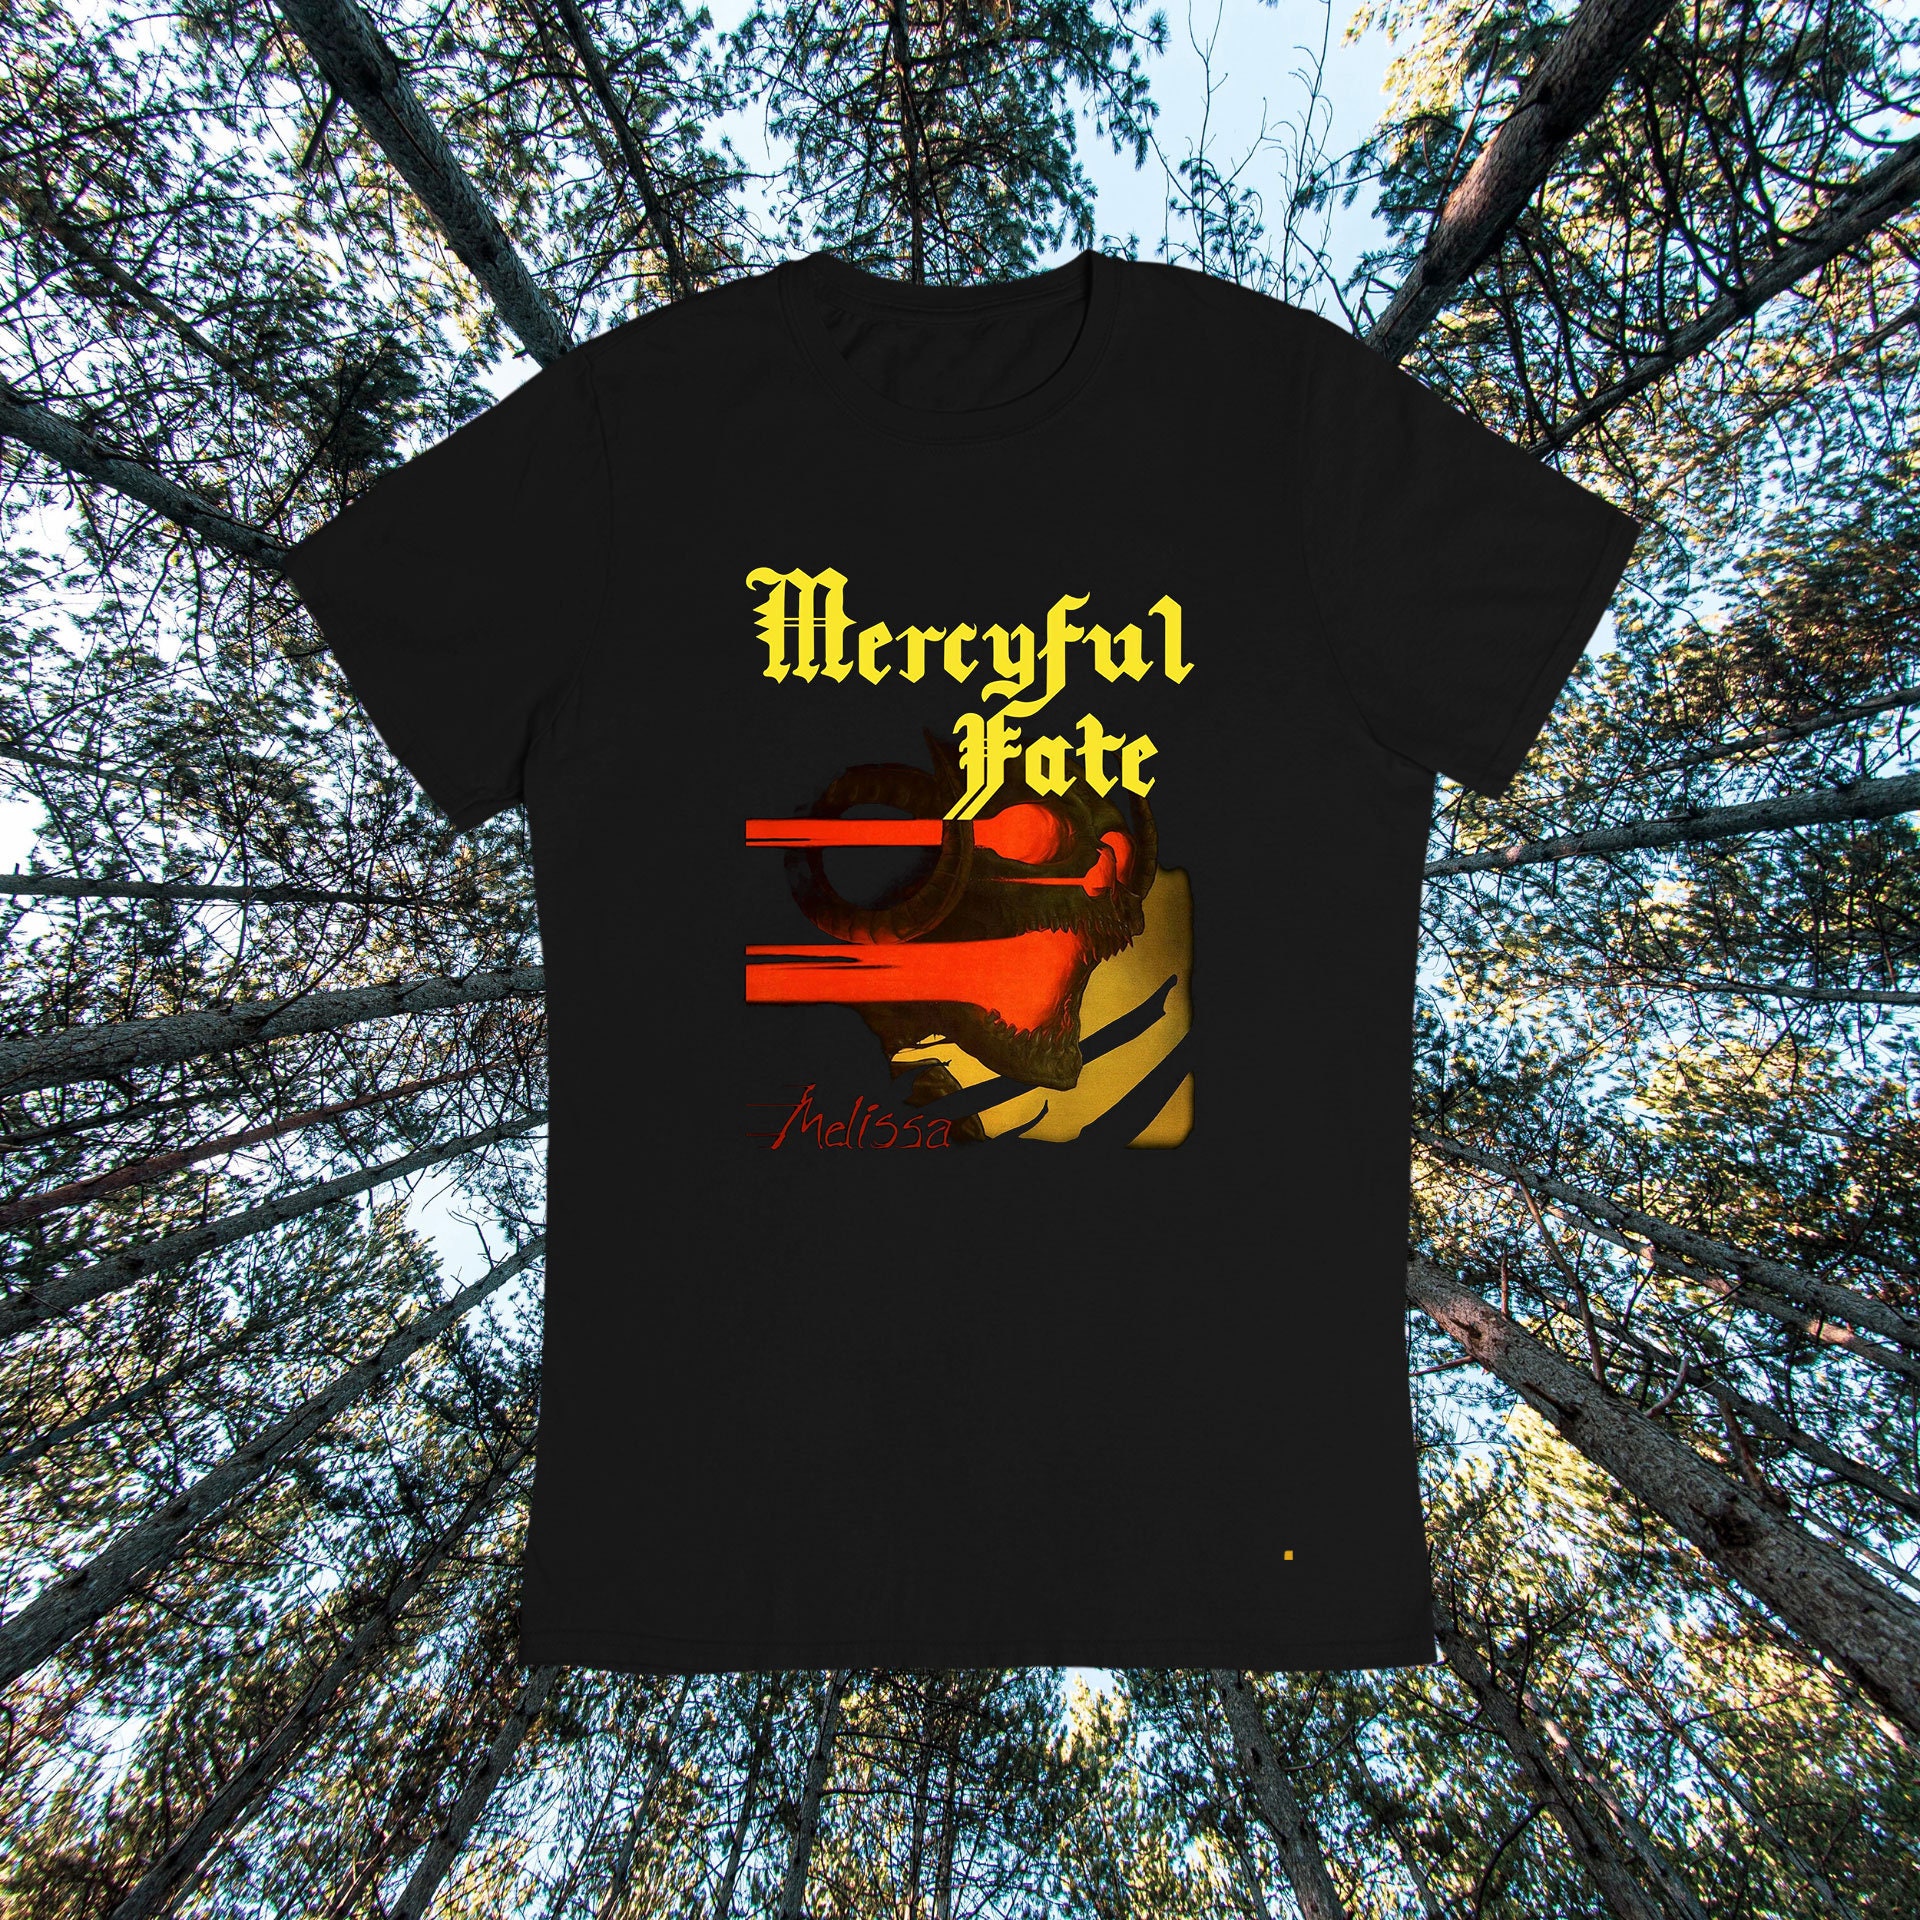 Discover Mercyful Fate Melissa Men's Black Tee Clothing Tshirt